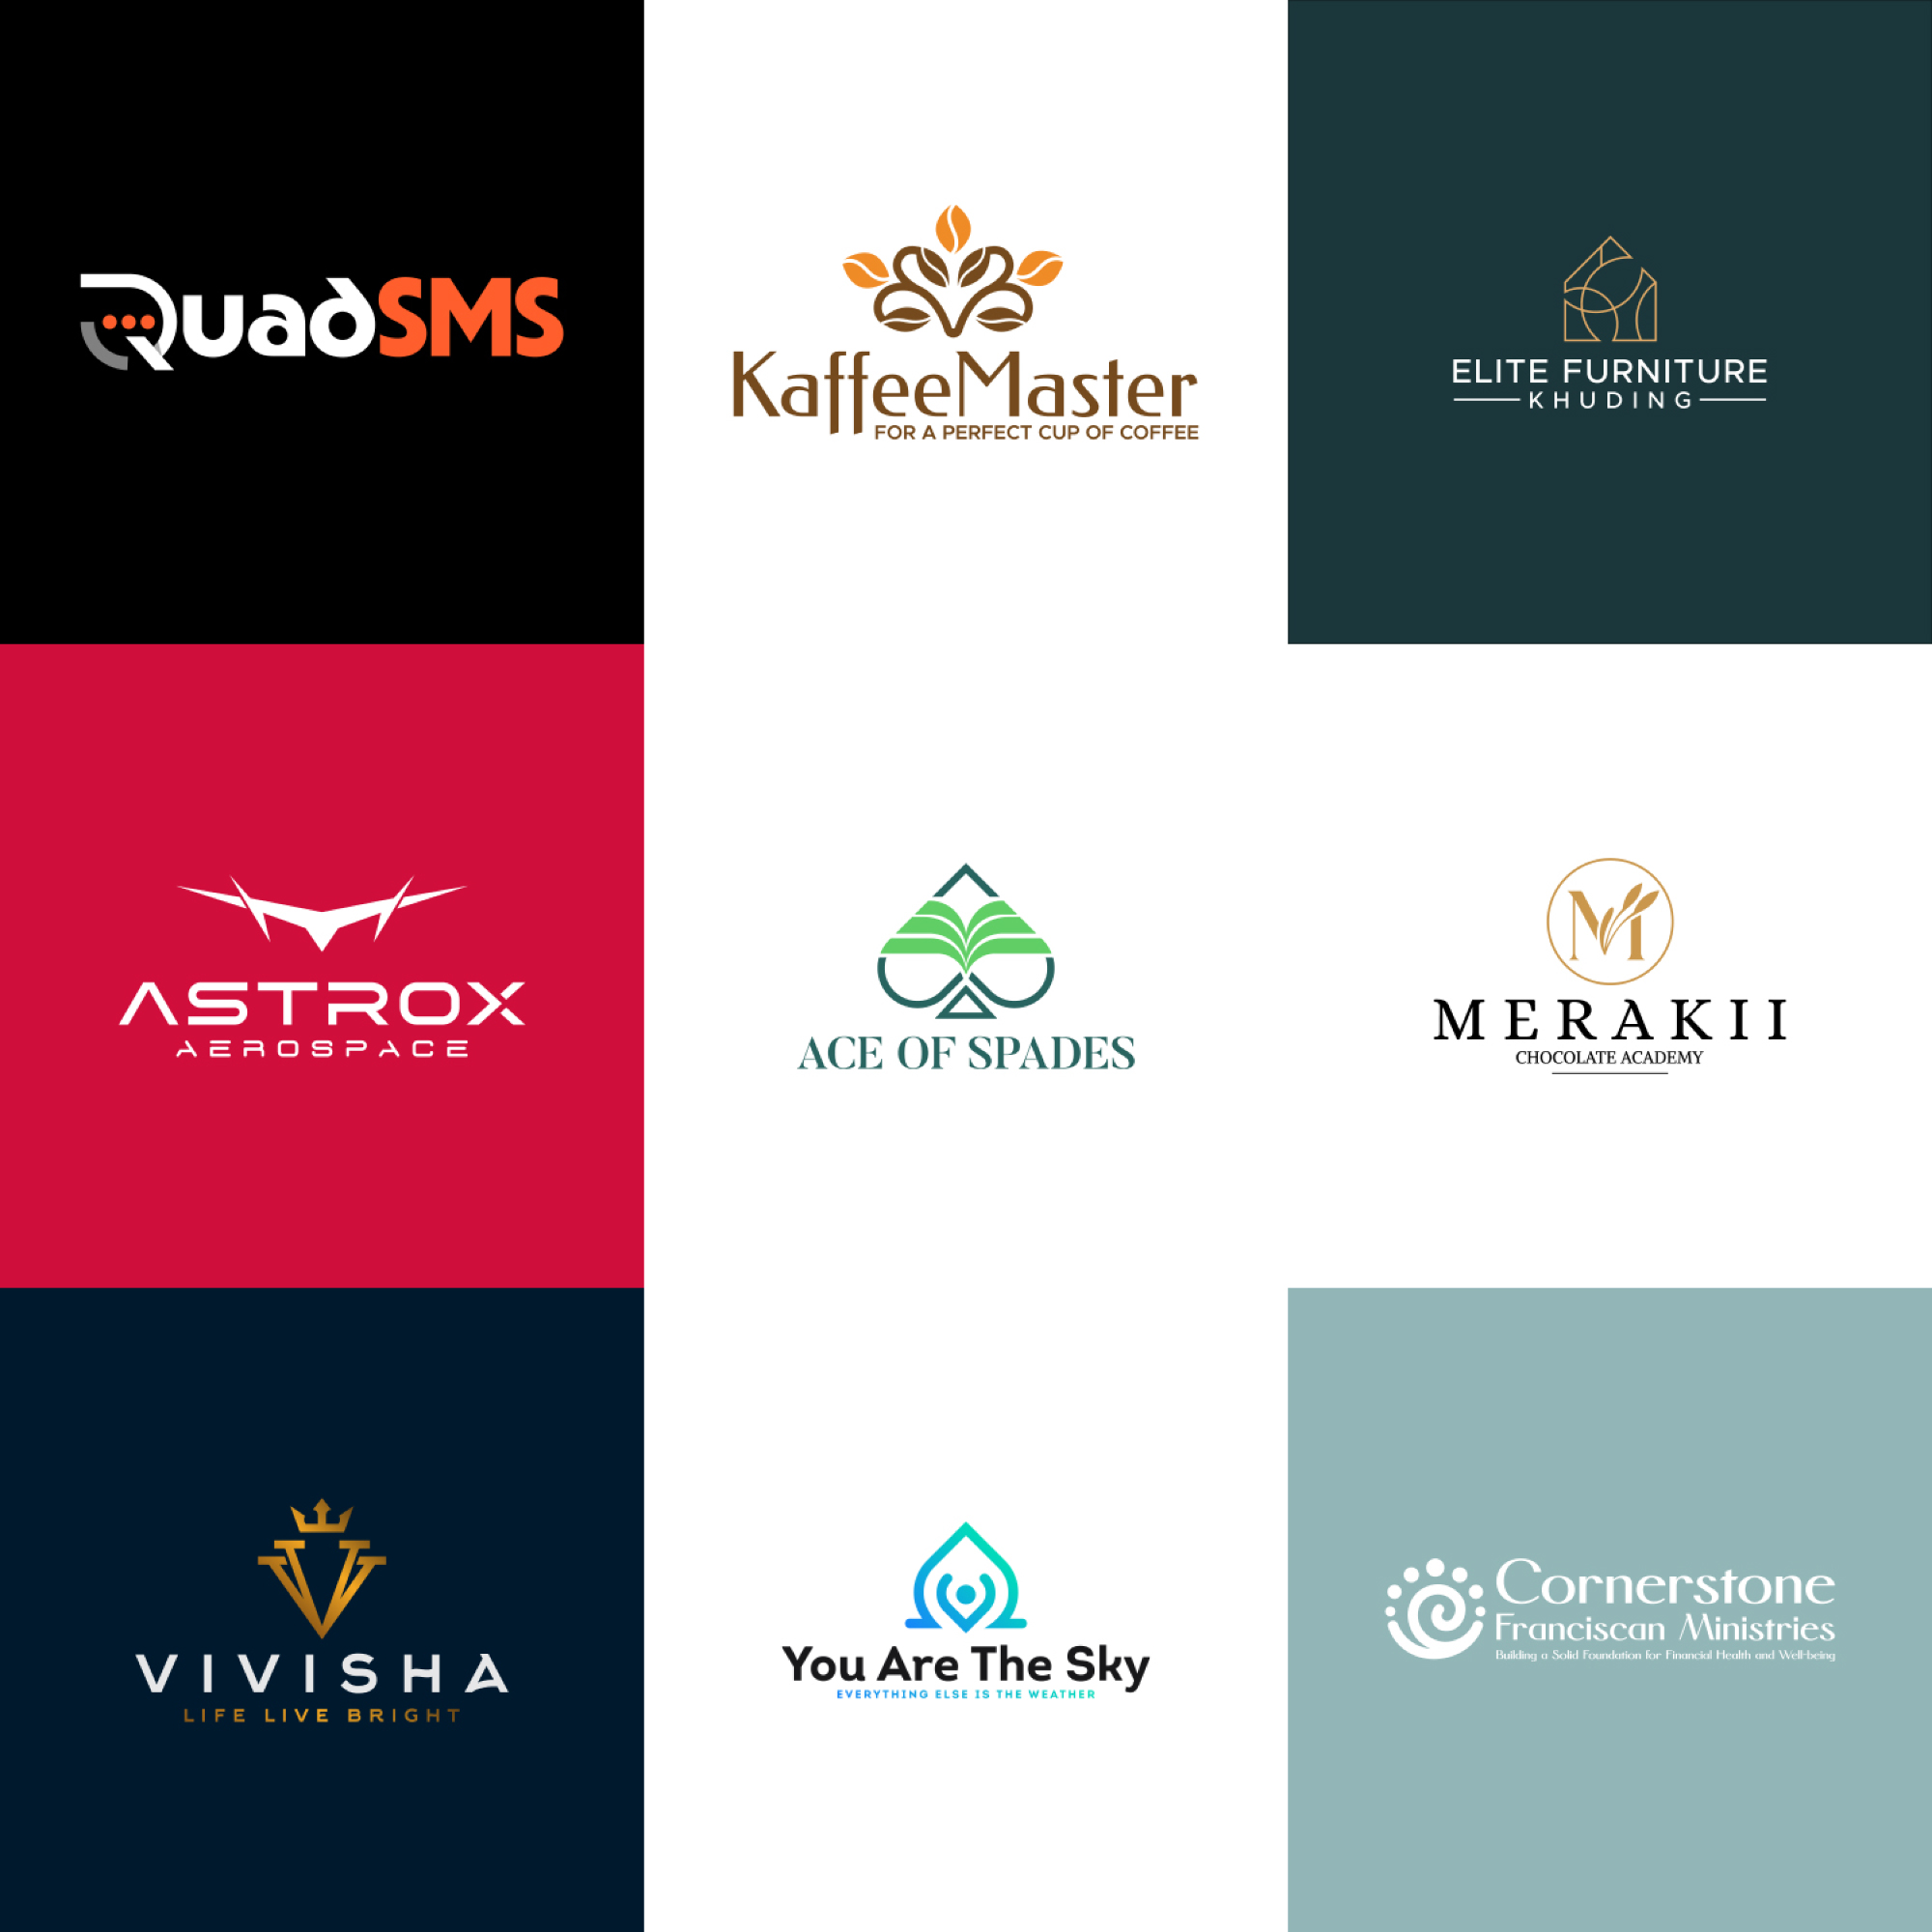 Logo, Cornerstone, Vivisha, Merakii, Elite Furniture, Ace Of Spades, QuadSMS, Astrox, Kaffee Master